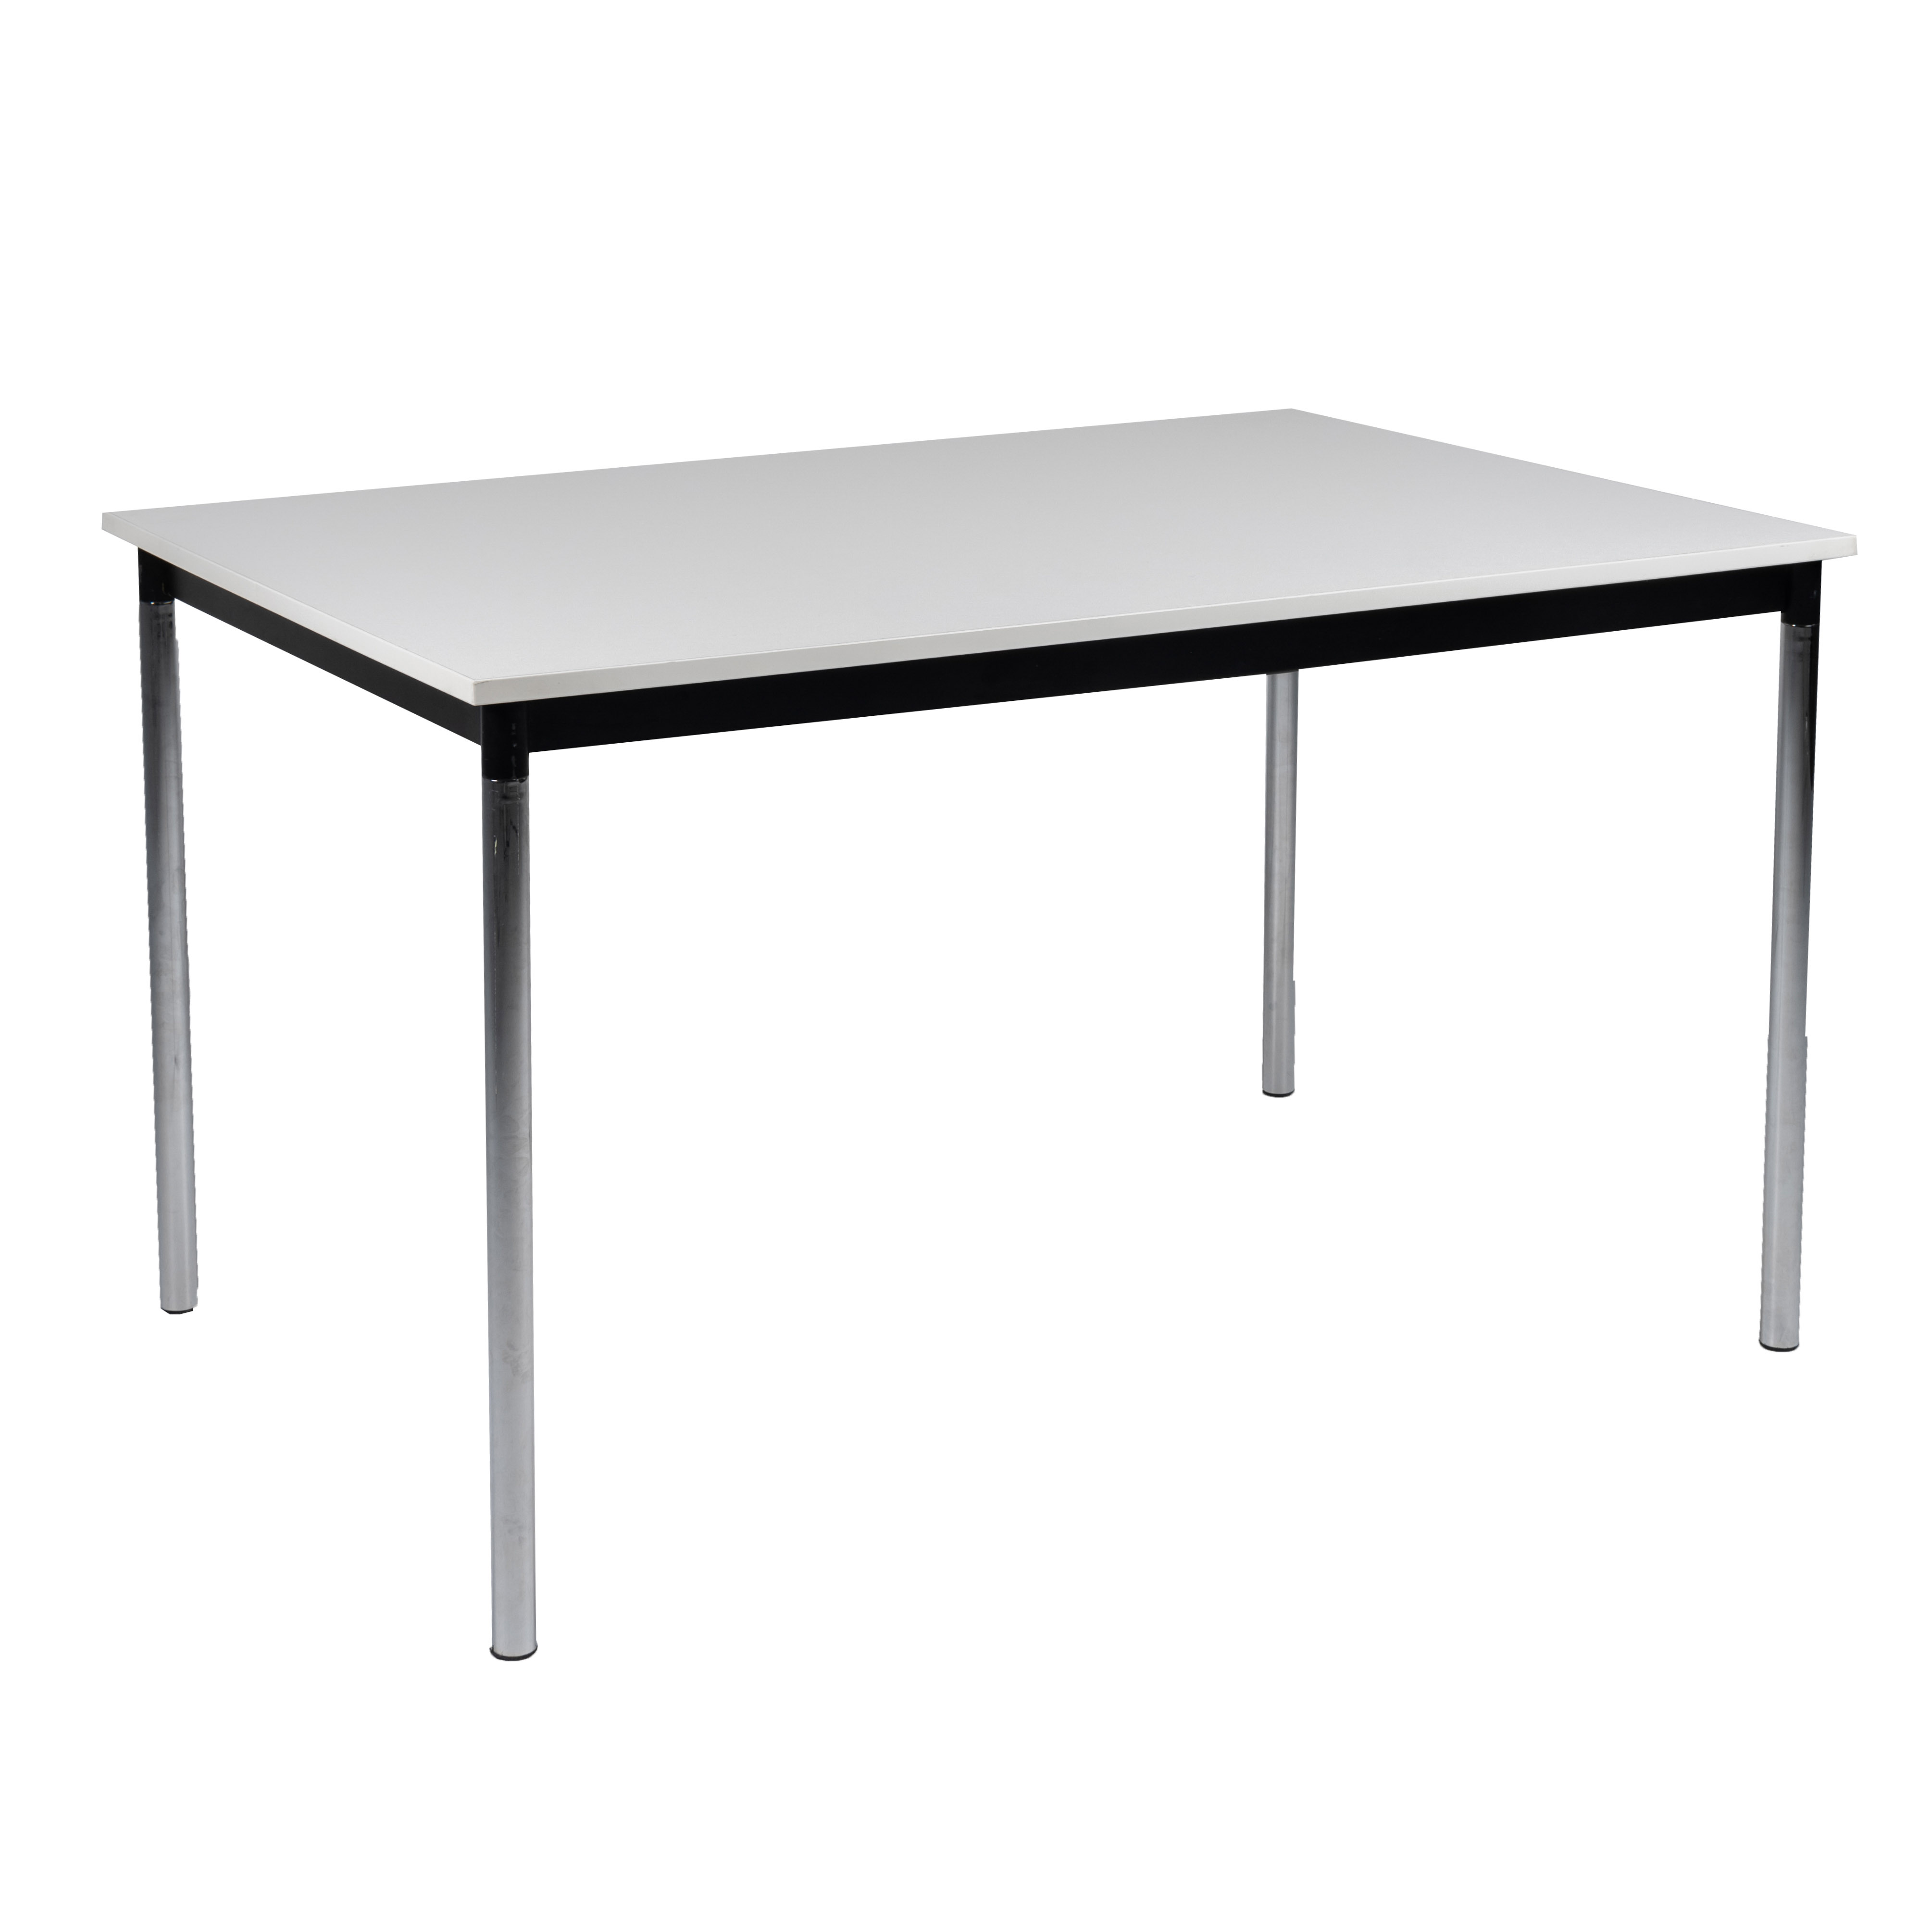 Table medola 70 - 120x60 plateau blanc